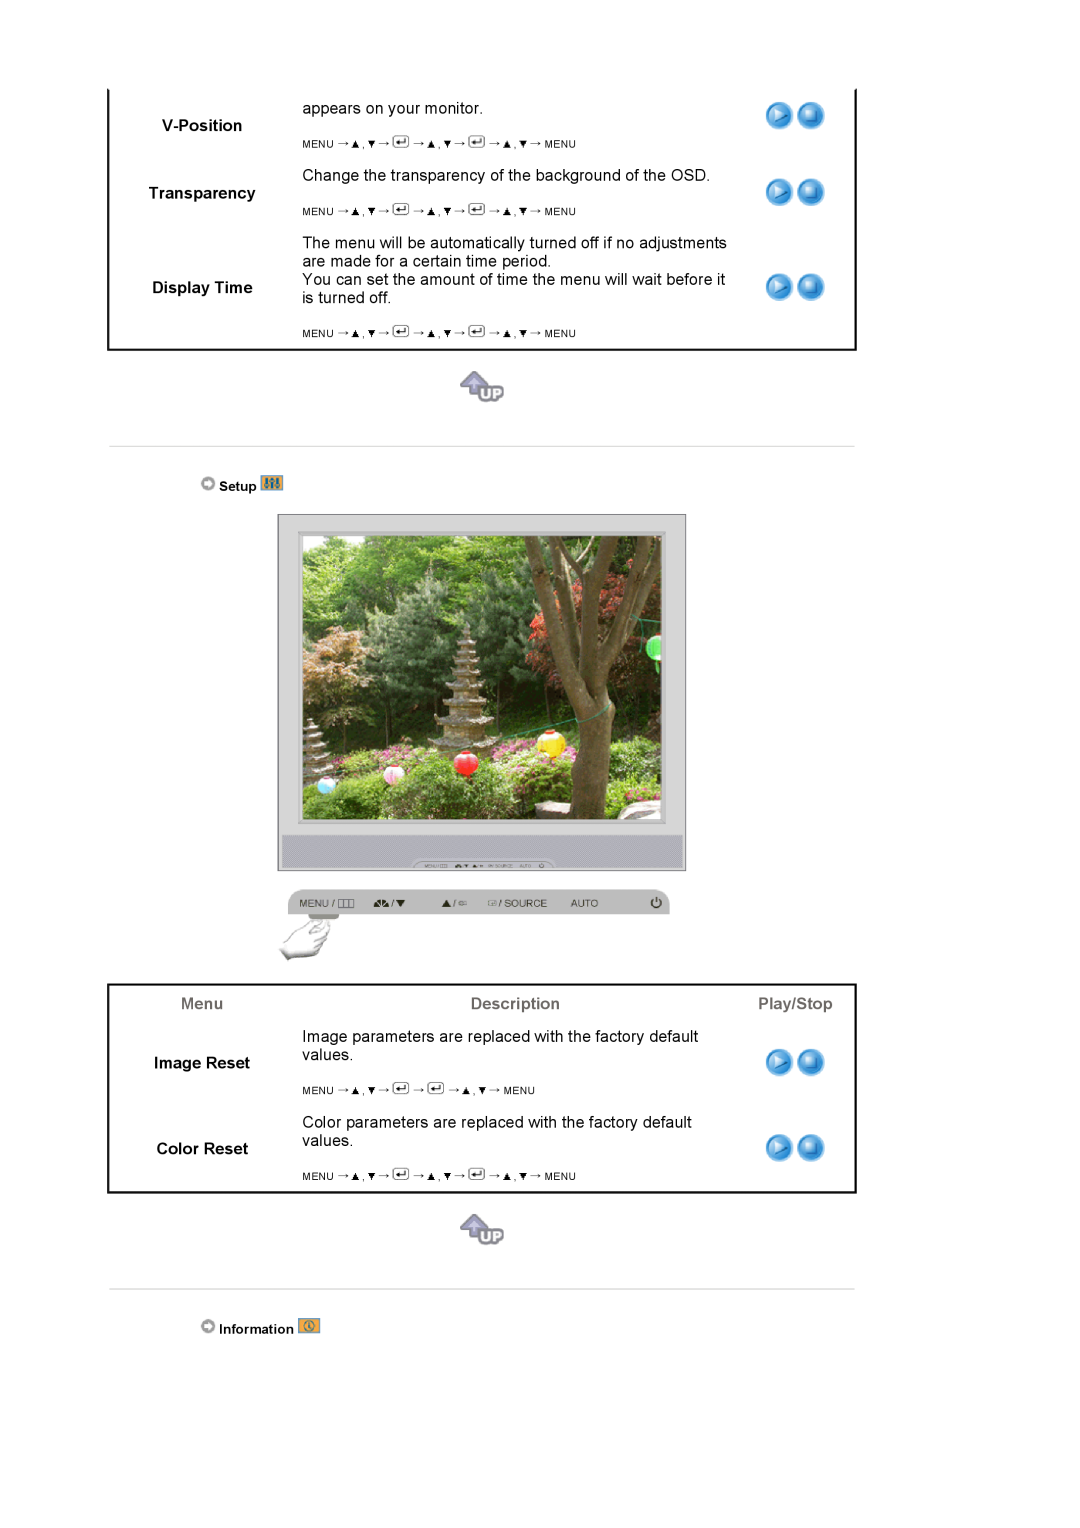 Samsung 710NT manual V-Position Transparency Display Time, Image Reset Color Reset 